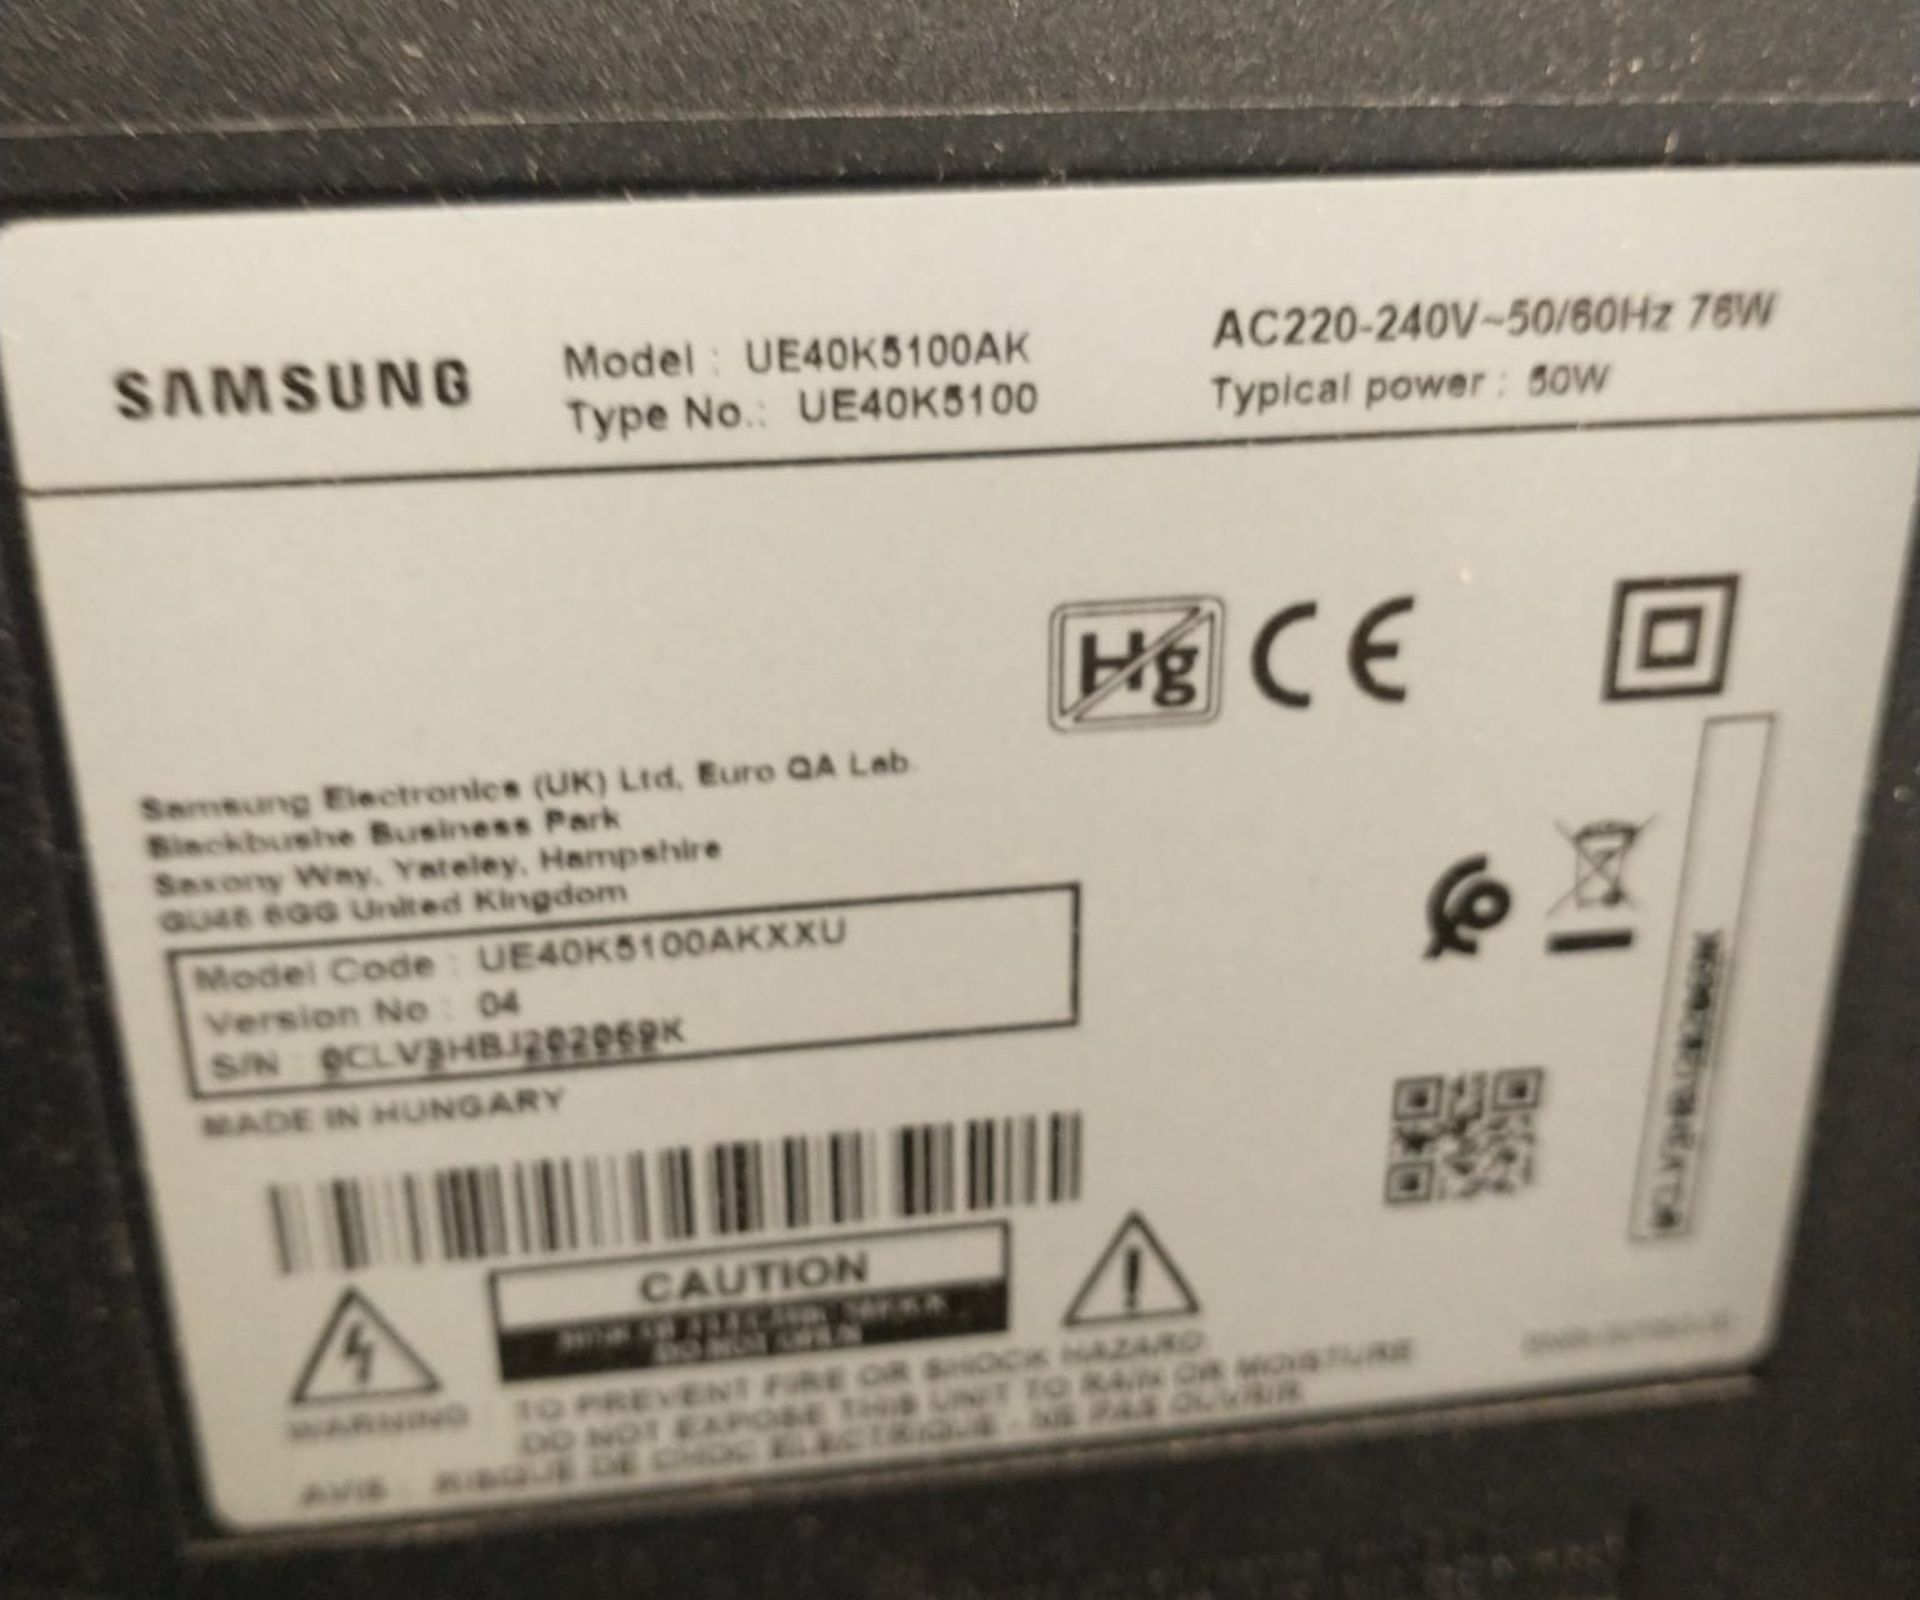 1 x Samsung 5 Series 40 Inch LED-backlit LCD Television - Full HD - Model UE40K5100AK - Ref: 1 x - Image 2 of 2